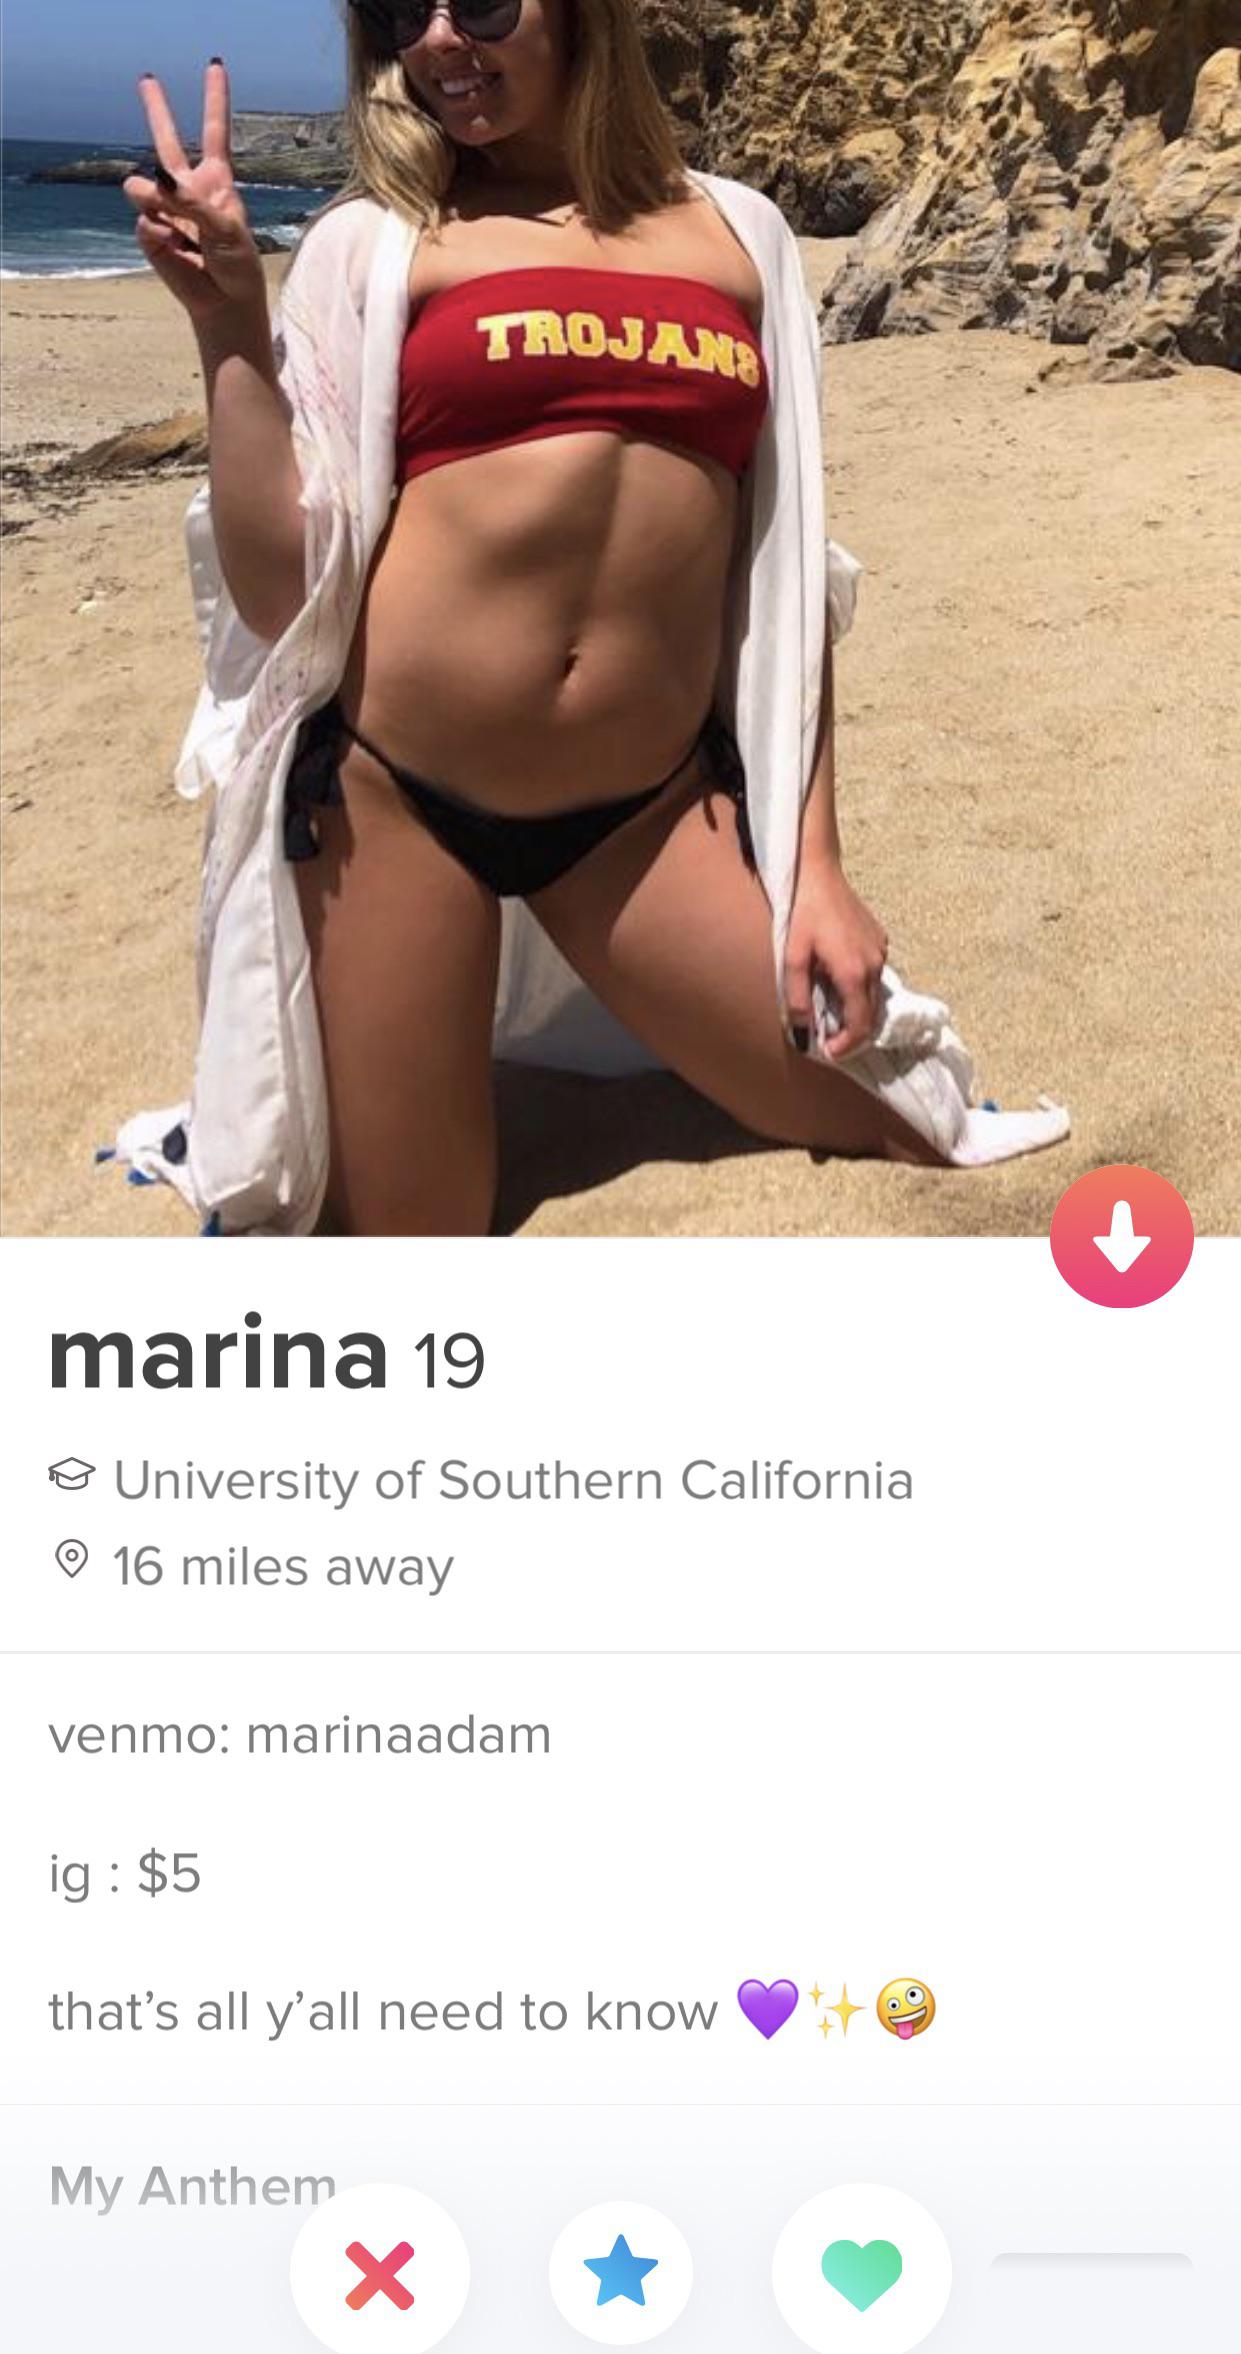 bikini - Trojans marina 19 @ University of Southern California 16 miles away venmo marinaadam ig $5 that's all y'all need to know My Anthem